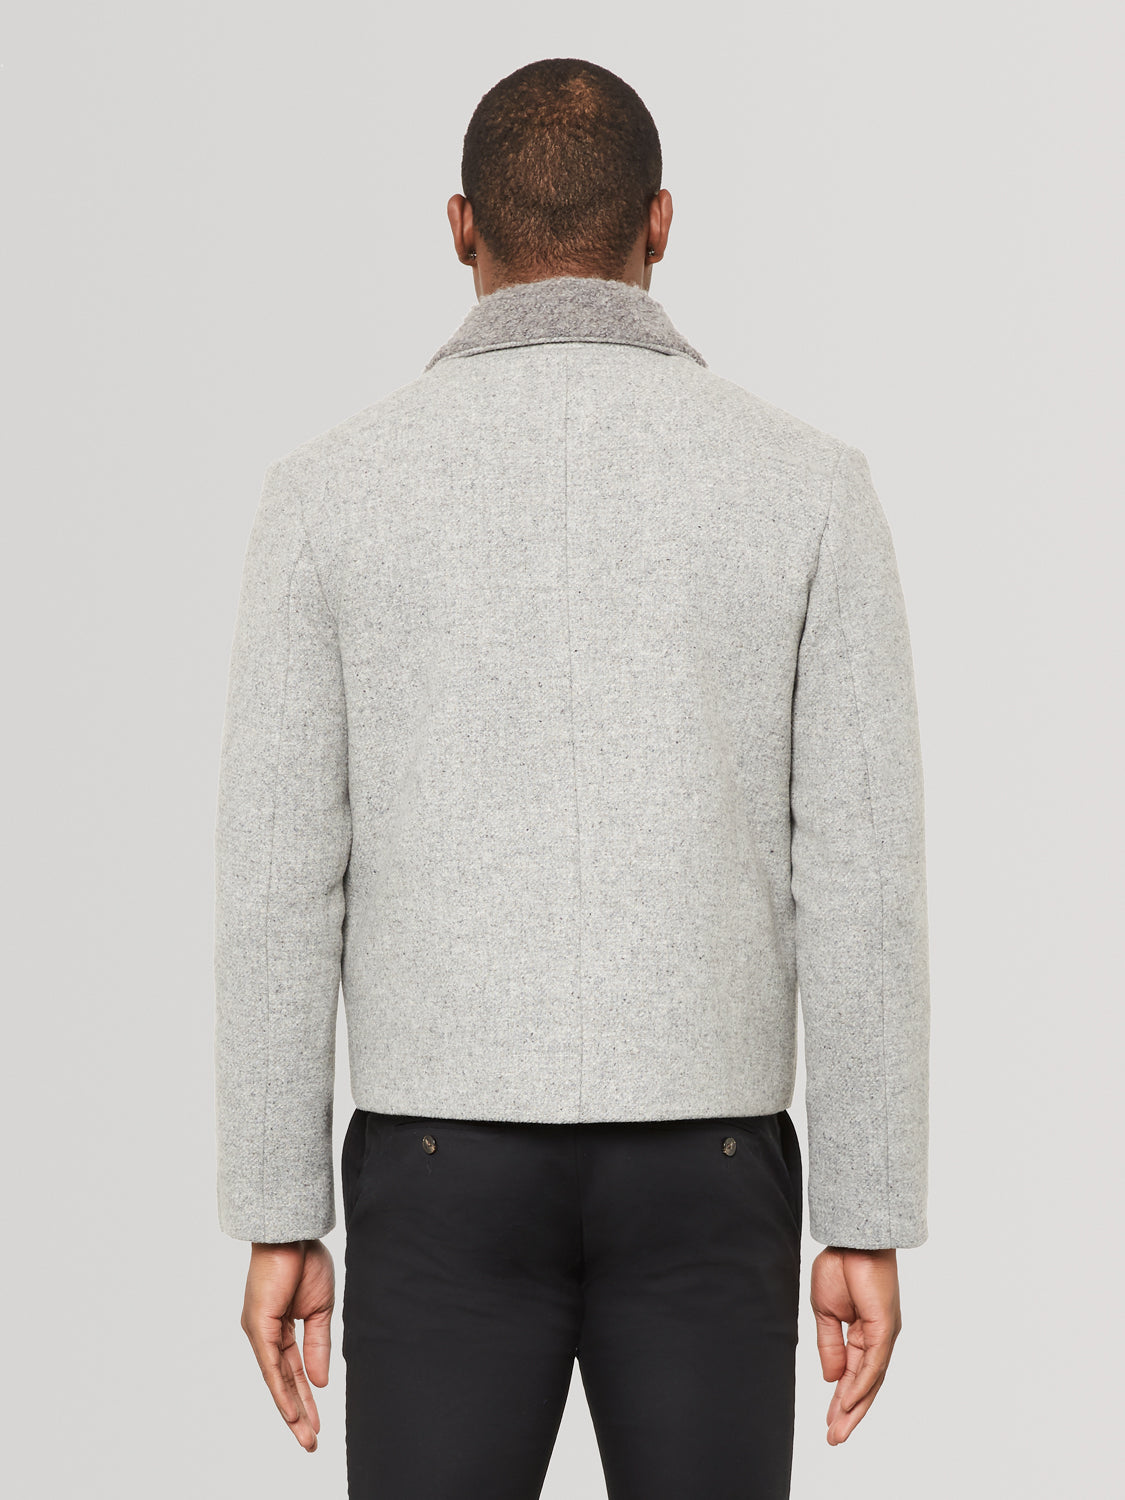 Westminster Jacket - Grey